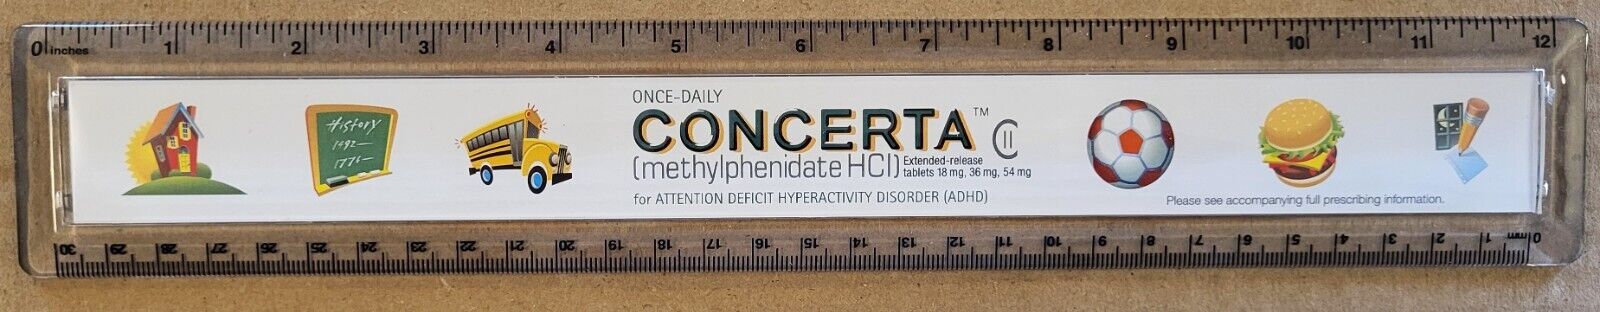 Concerta (ADHD) Pharmaceutical 12 Inch Plastic Ruler - New